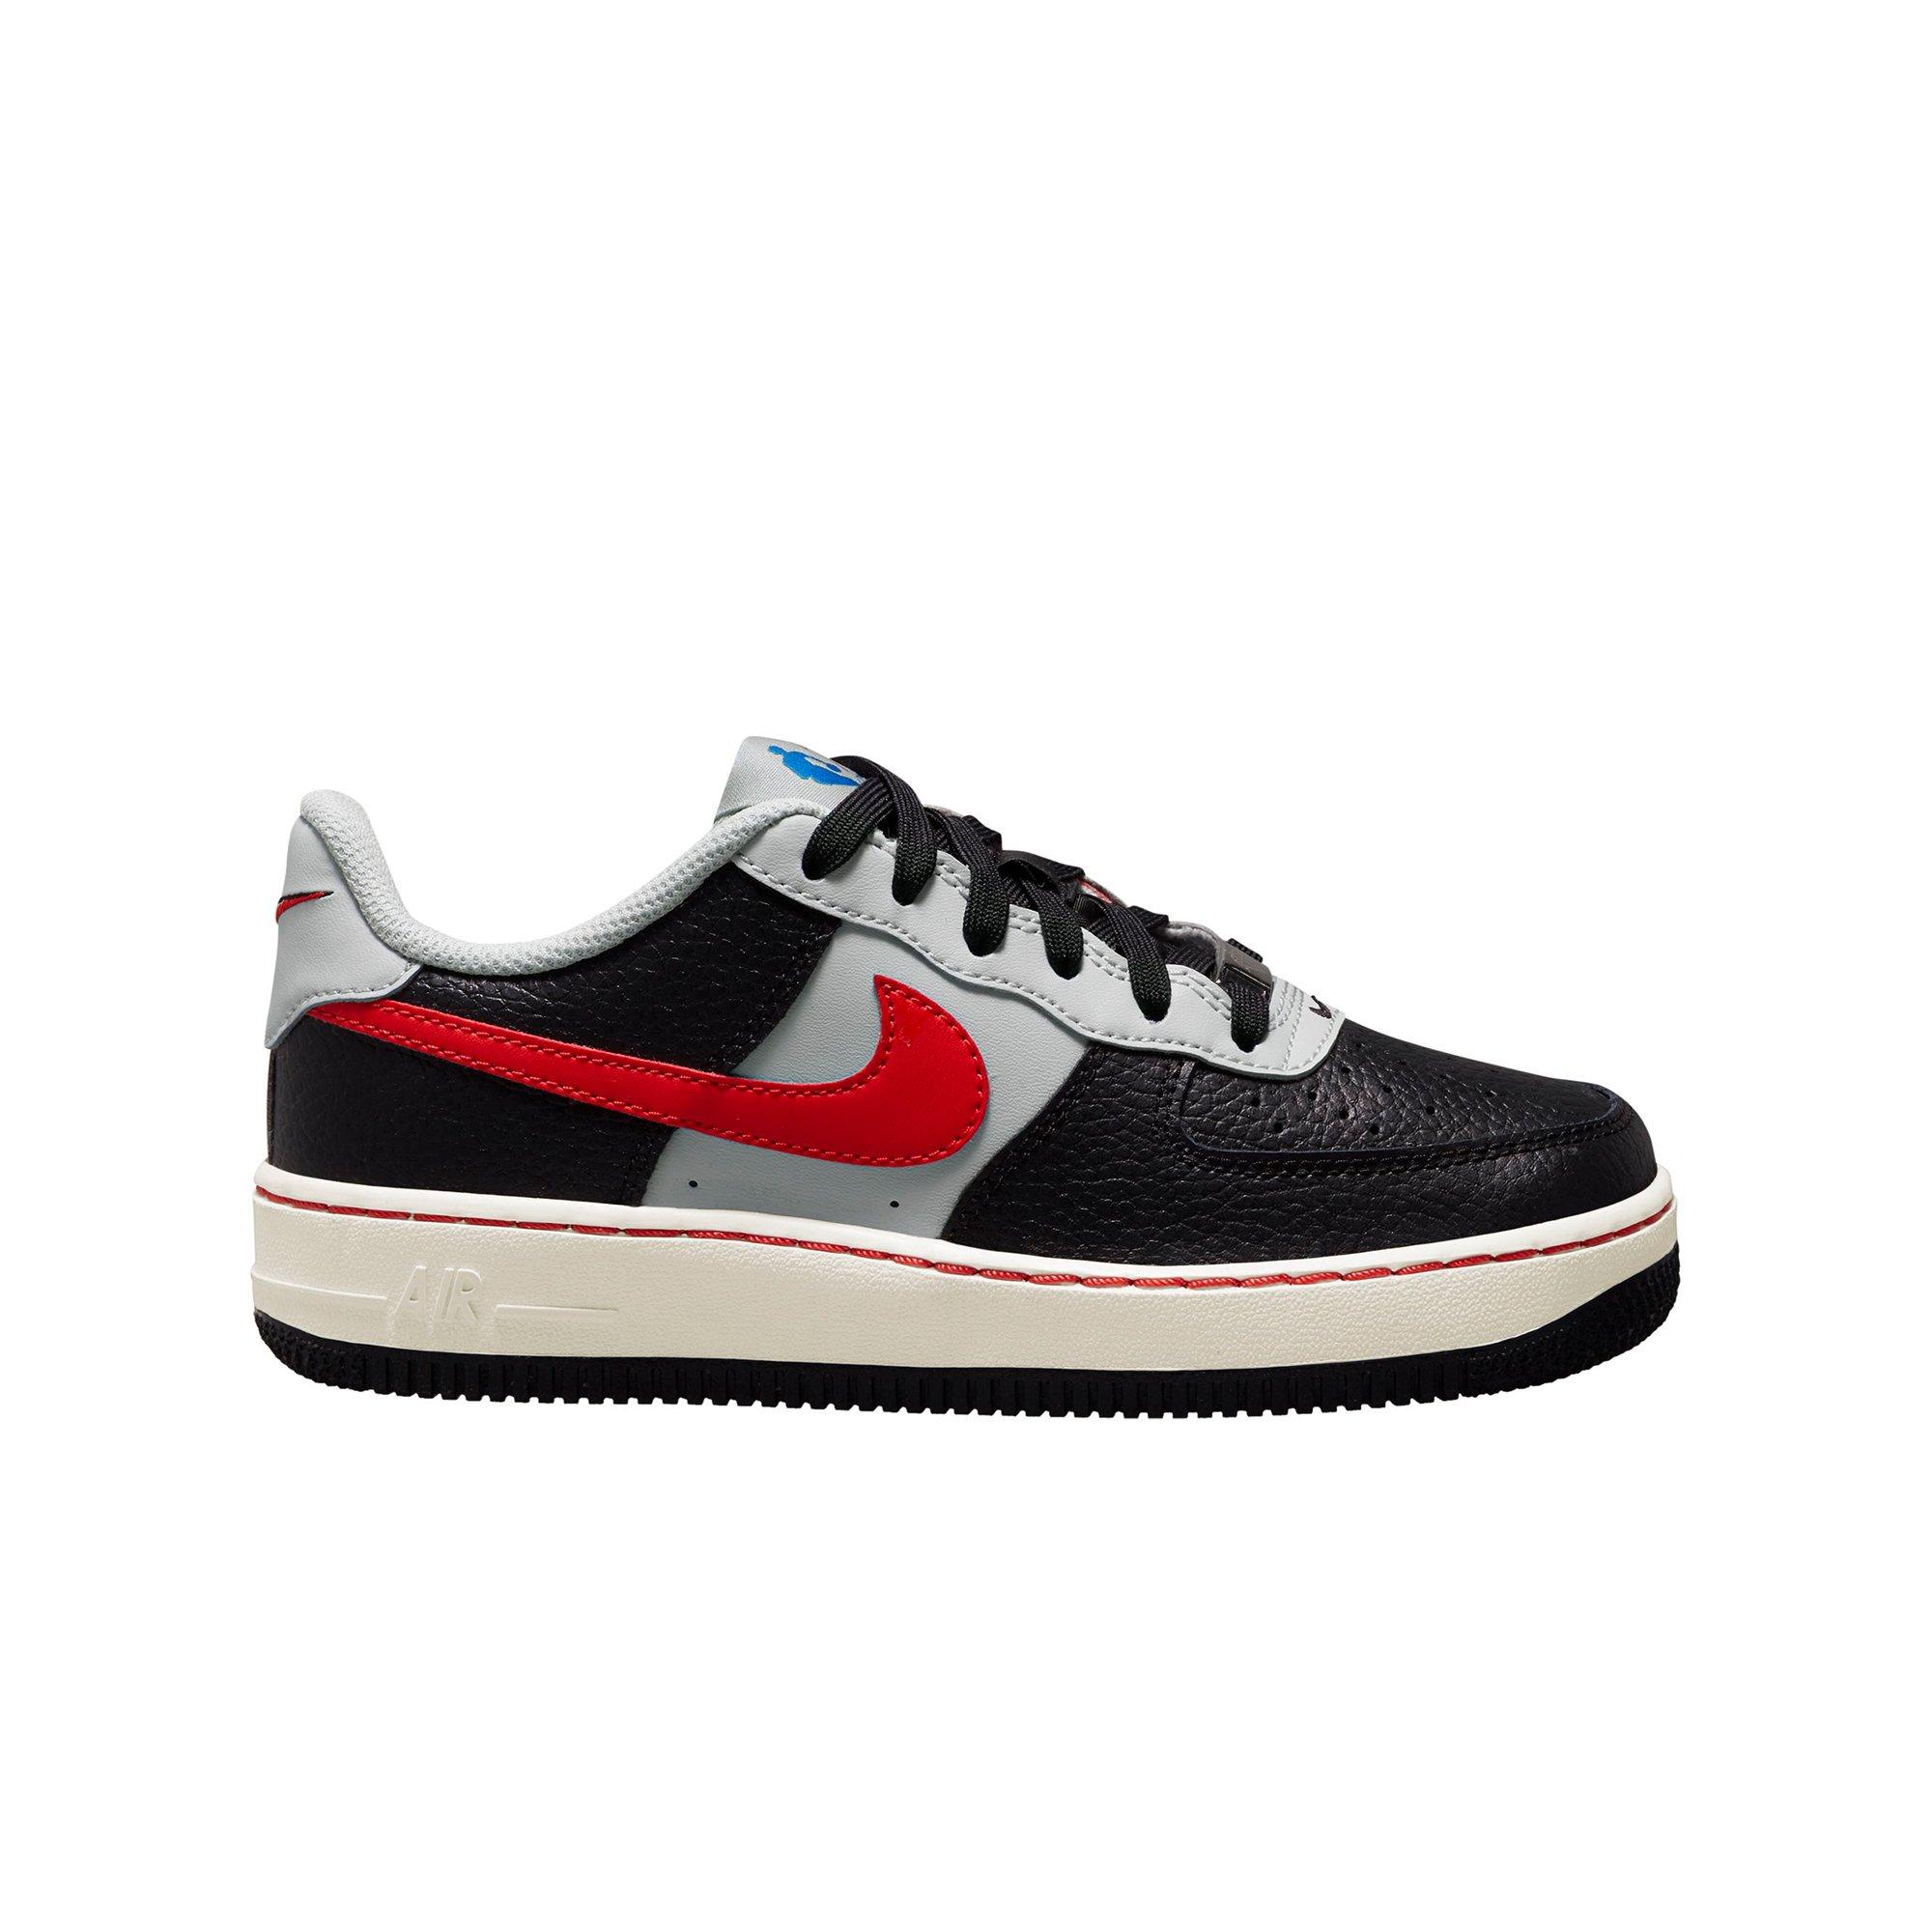 Nike Air Force AF-1 ’82 High Top Sneaker Size 8.5 Black / Red Grey